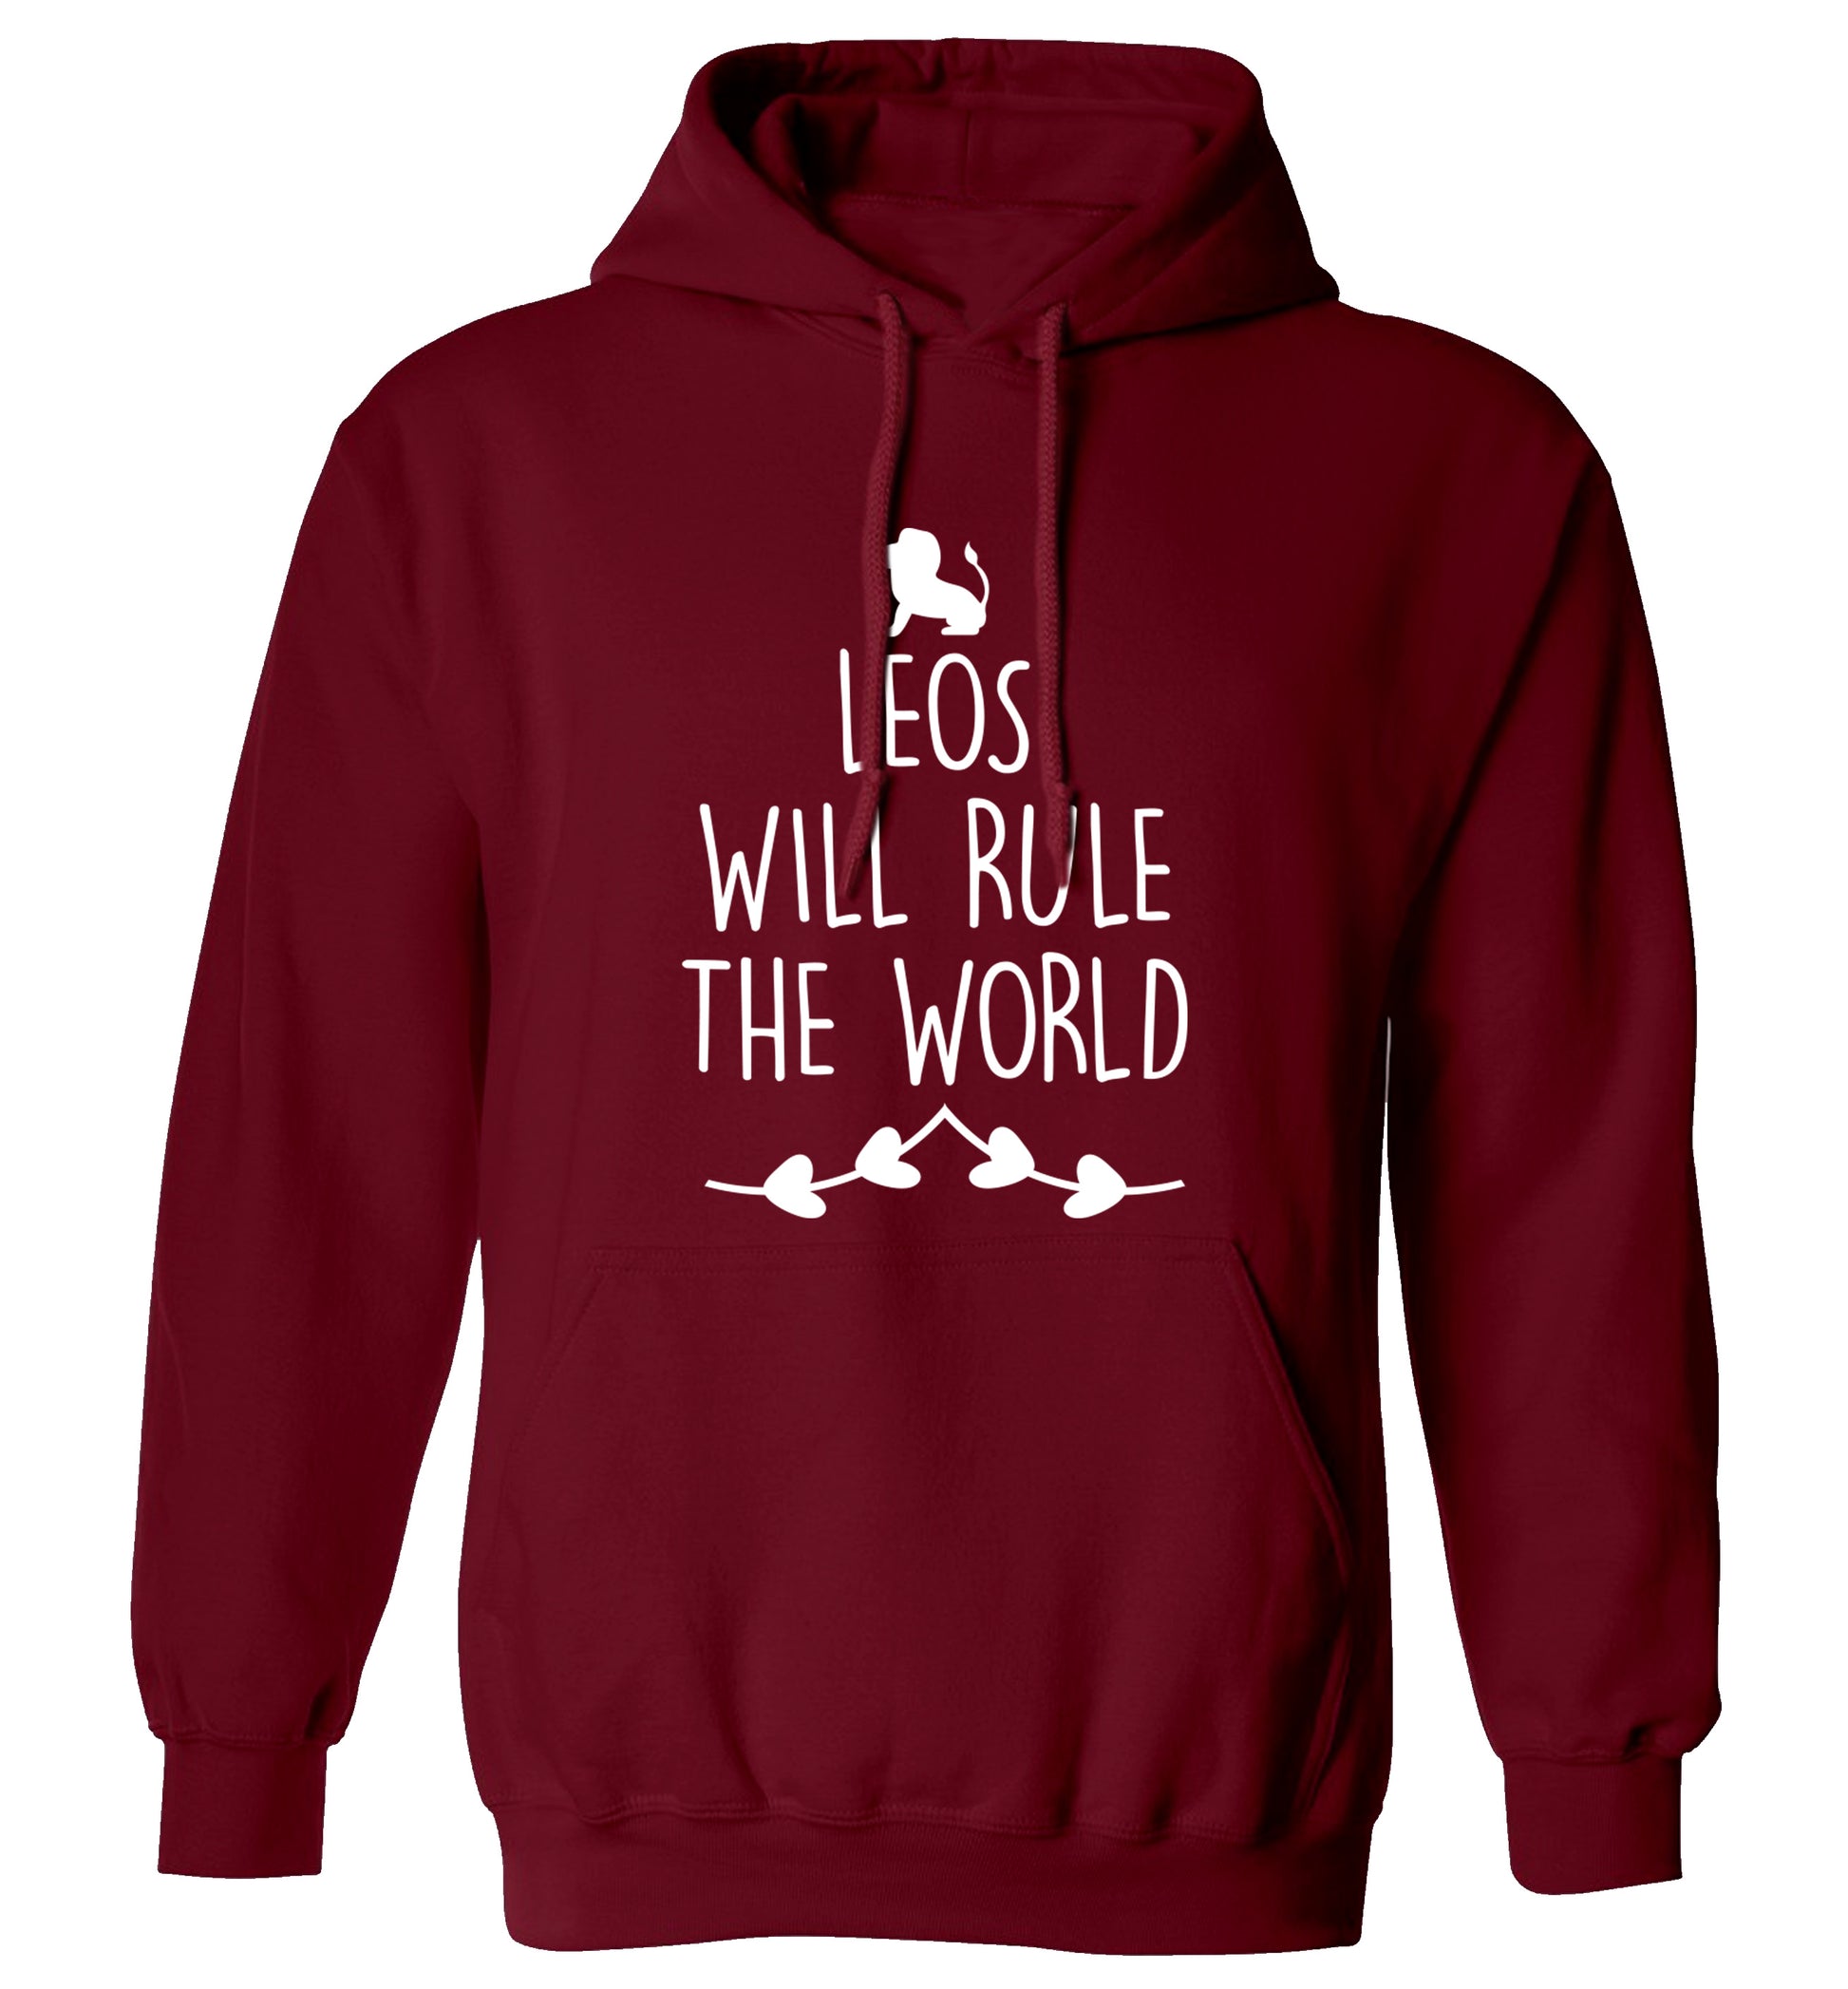 Leos will run the world adults unisex maroon hoodie 2XL